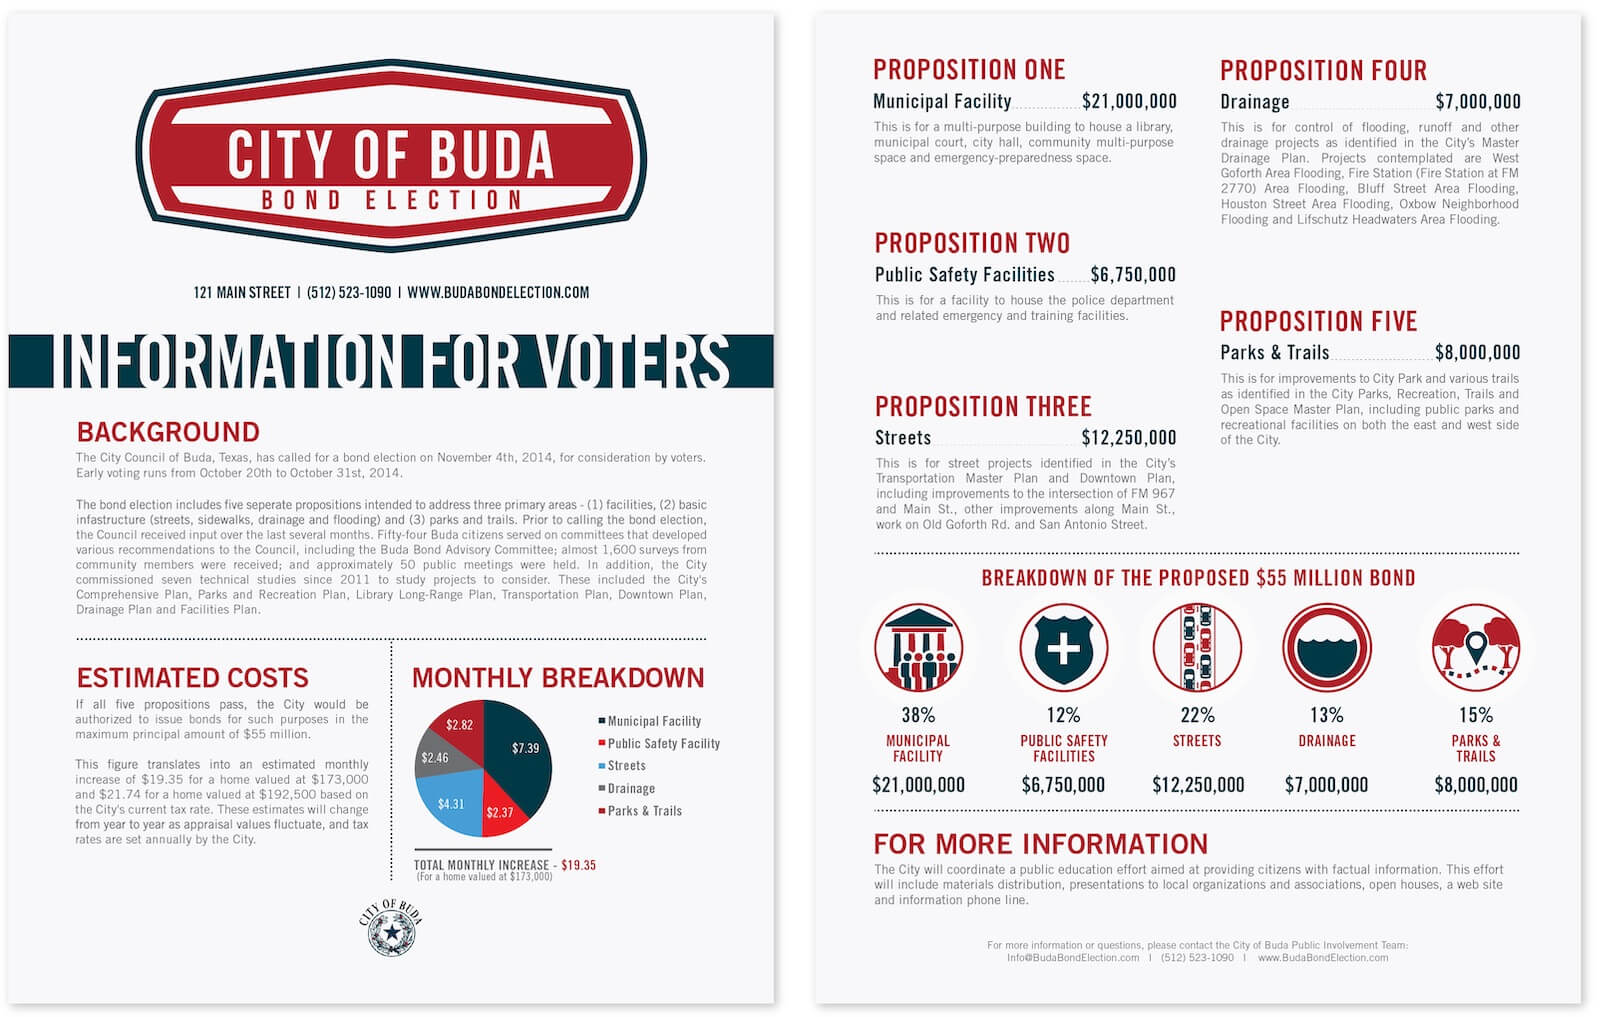 City of Buda Bond Election voter messaging